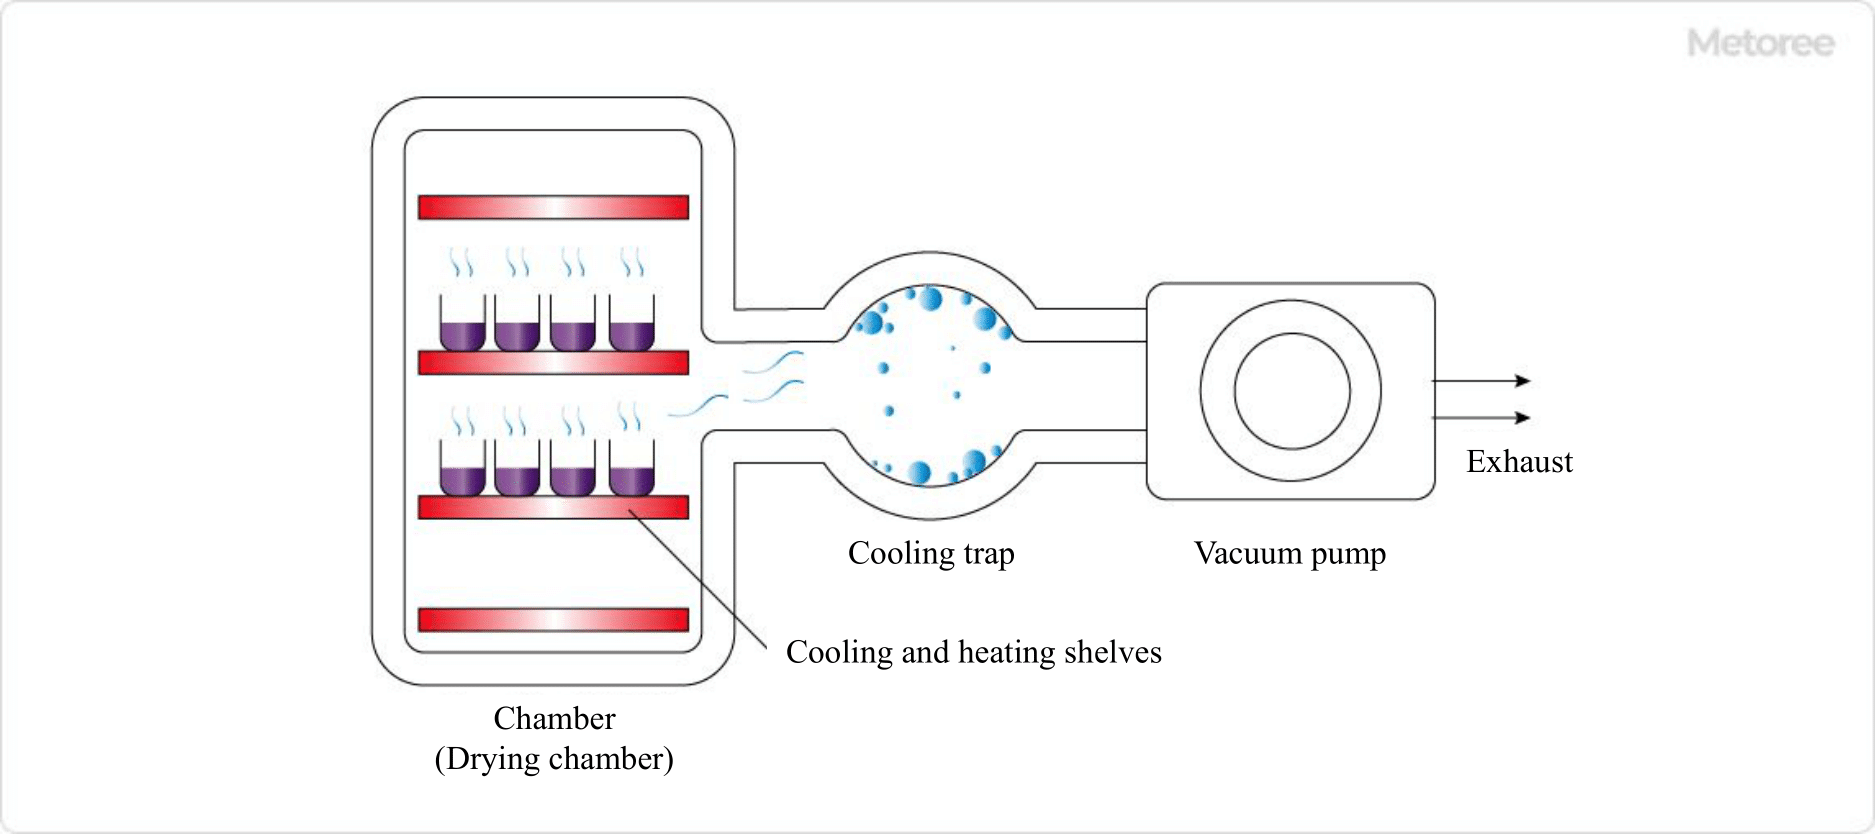 Figure 2. Schematic diagram of a freeze dryer